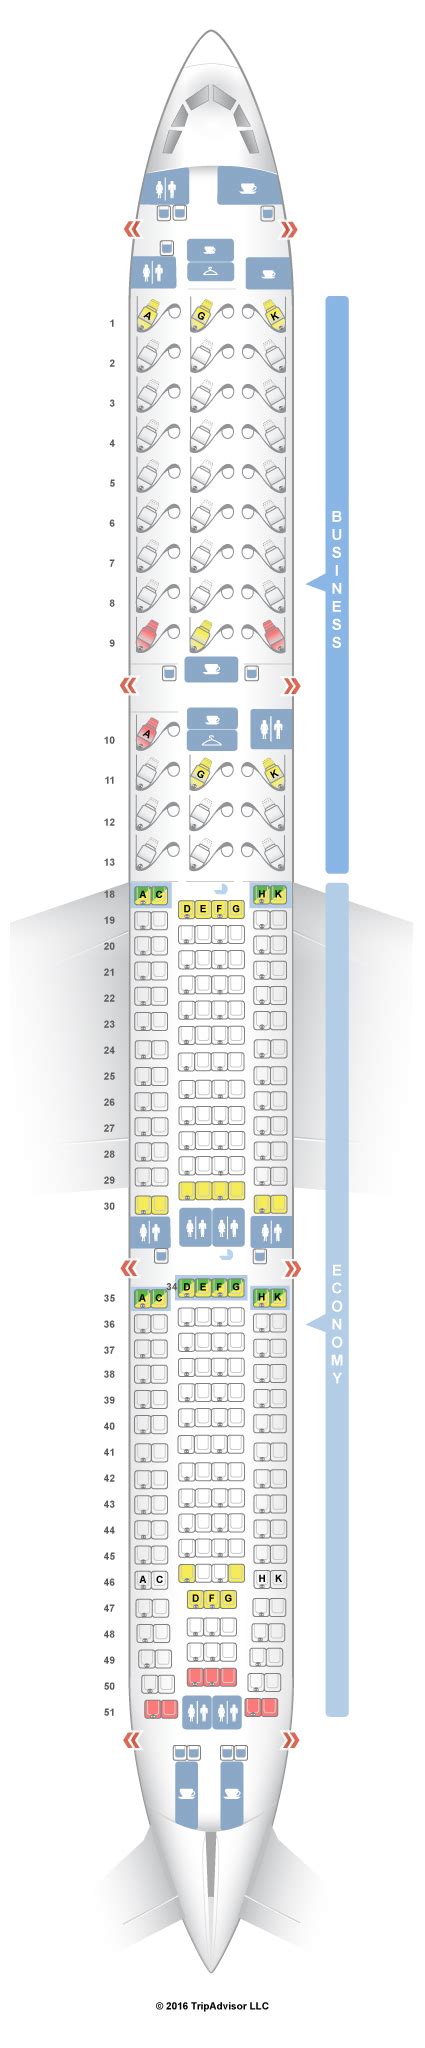 SeatGuru Seat Map Air Canada Airbus A330 300 333 V1